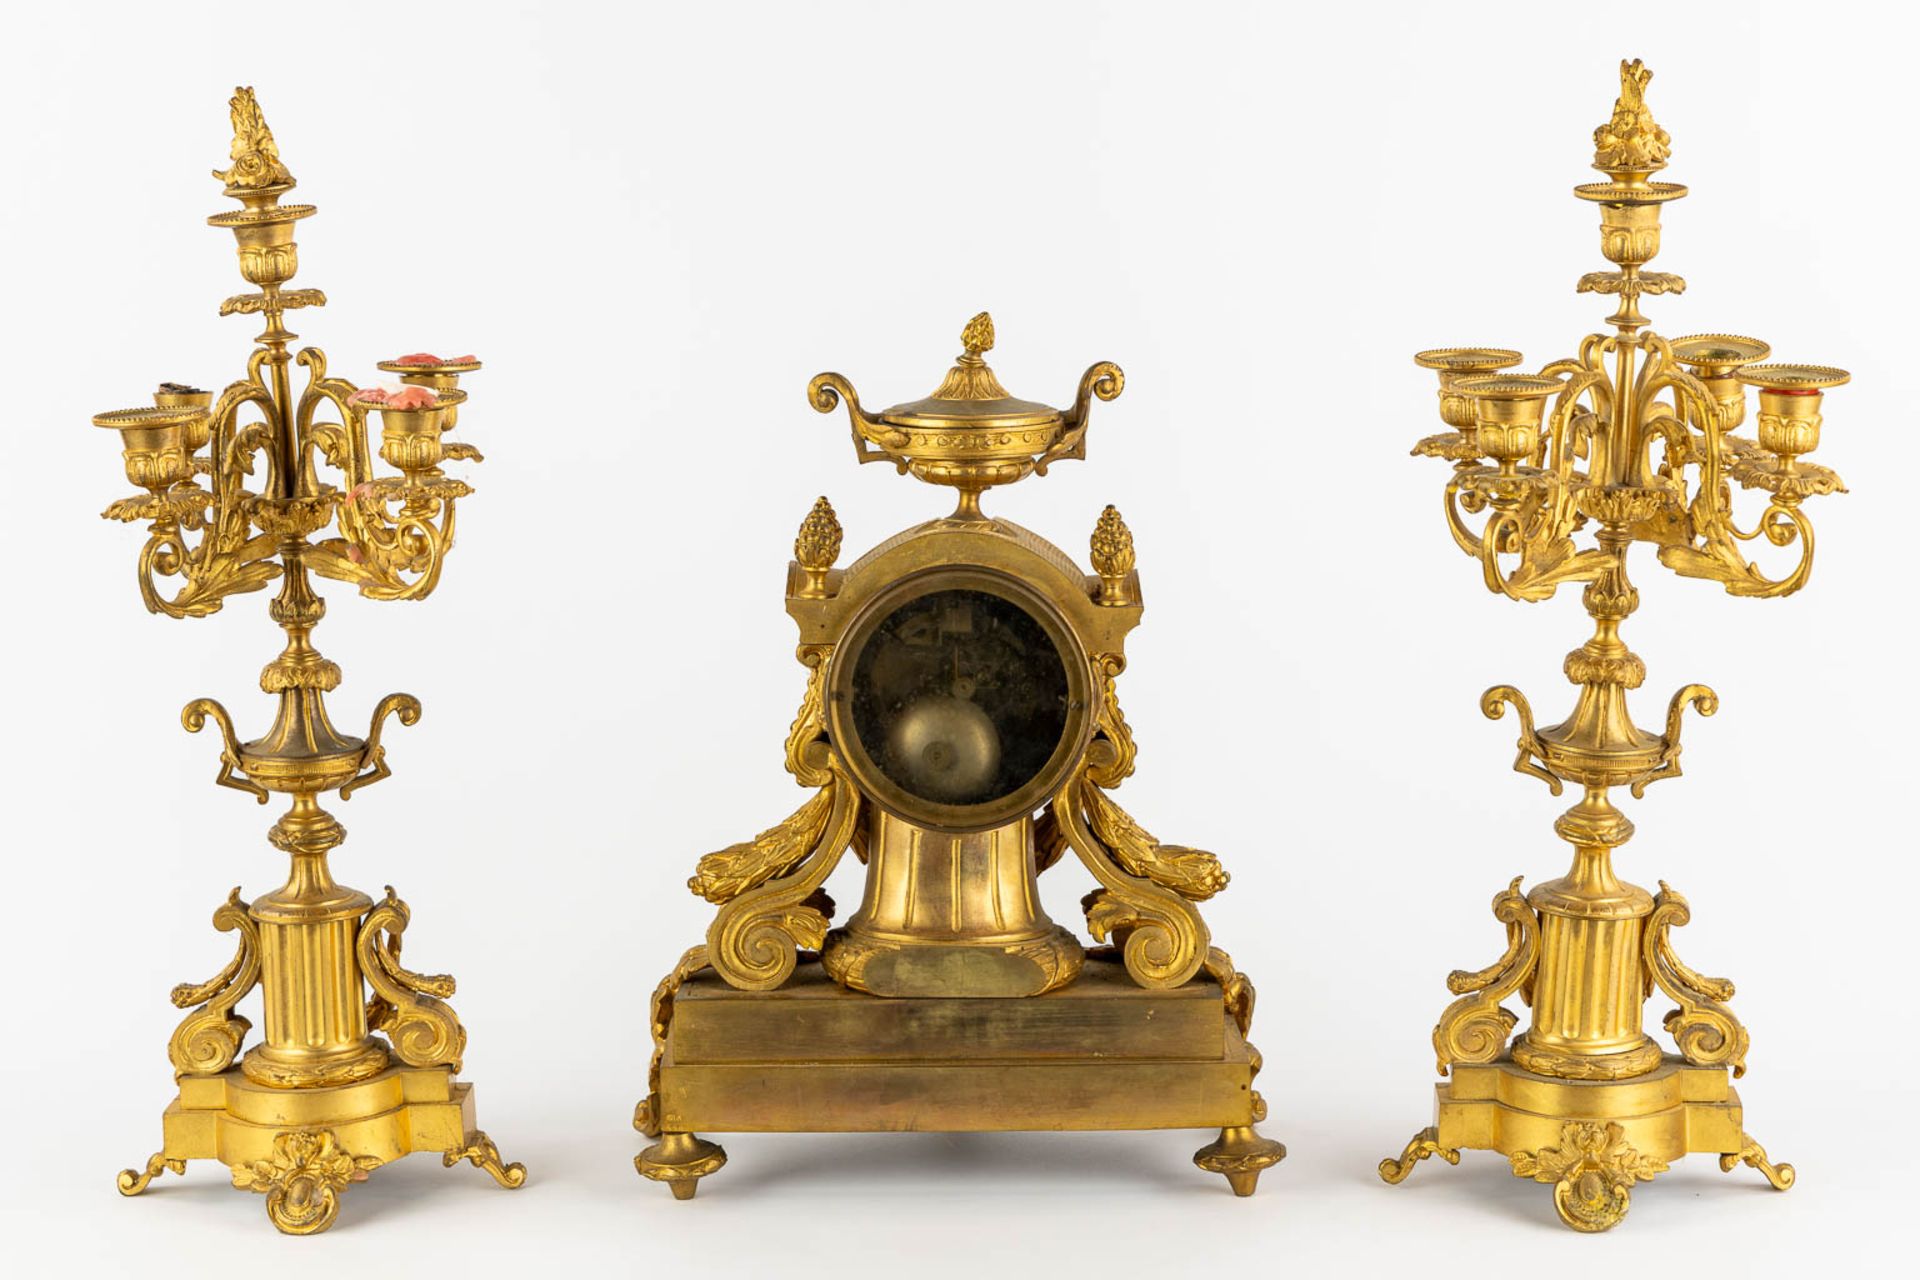 A three-piece mantle garniture clock and candelabra, gilt bronze. 19th C. (L:20 x W:32 x H:43 cm) - Image 5 of 13